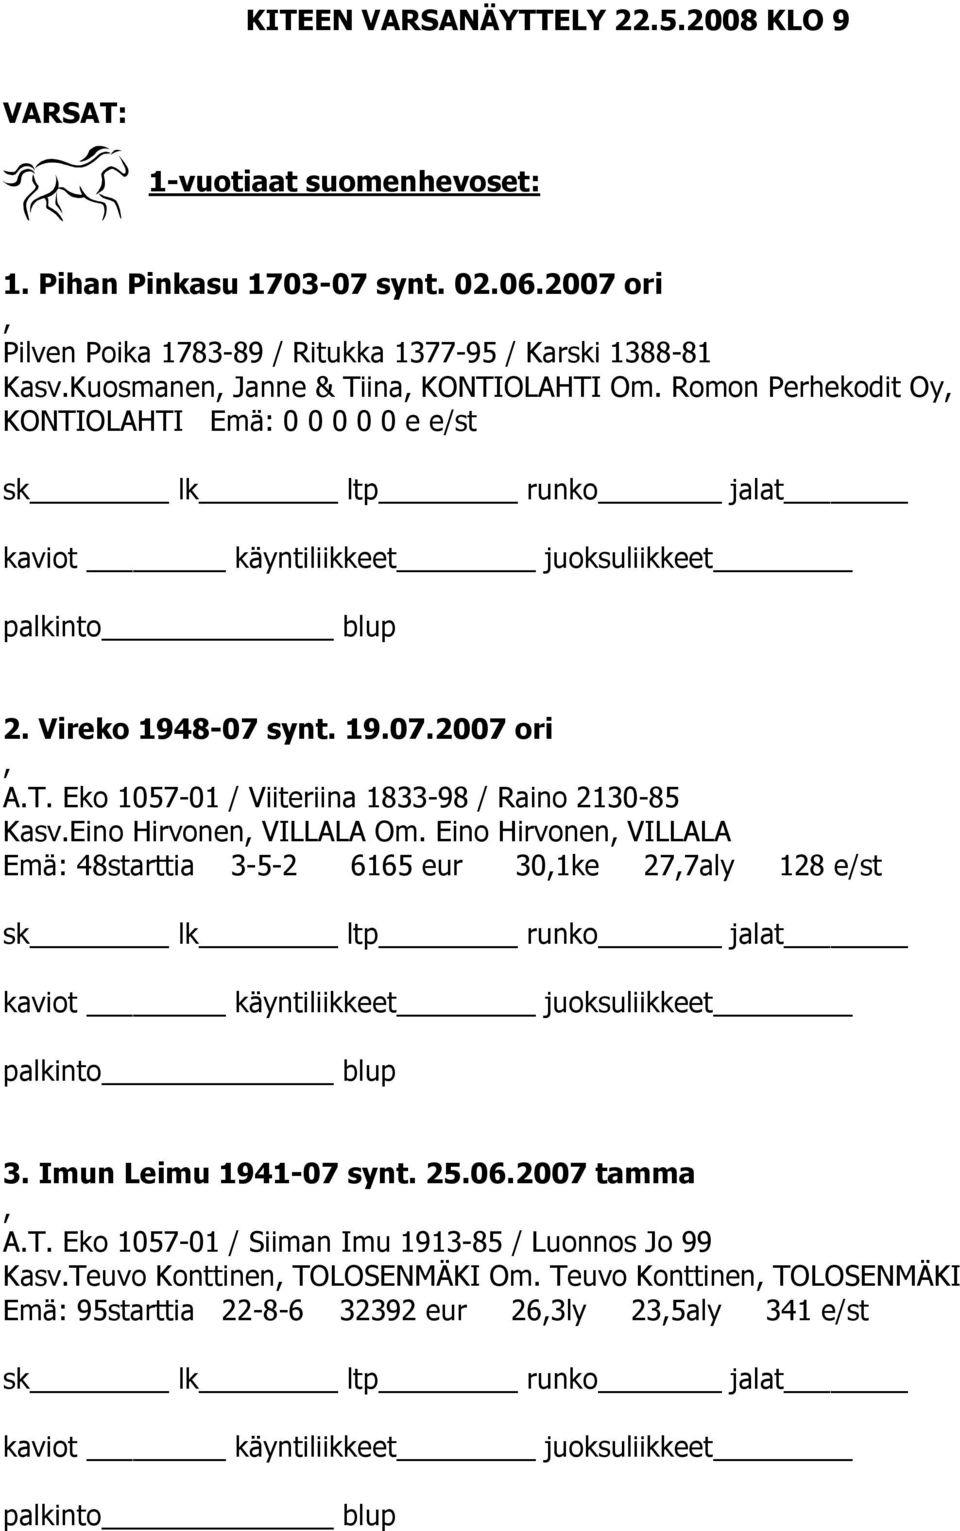 Vireko 1948-07 synt. 19.07.2007 ori, A.T. Eko 1057-01 / Viiteriina 1833-98 / Raino 2130-85 Kasv.Eino Hirvonen, VILLALA Om.